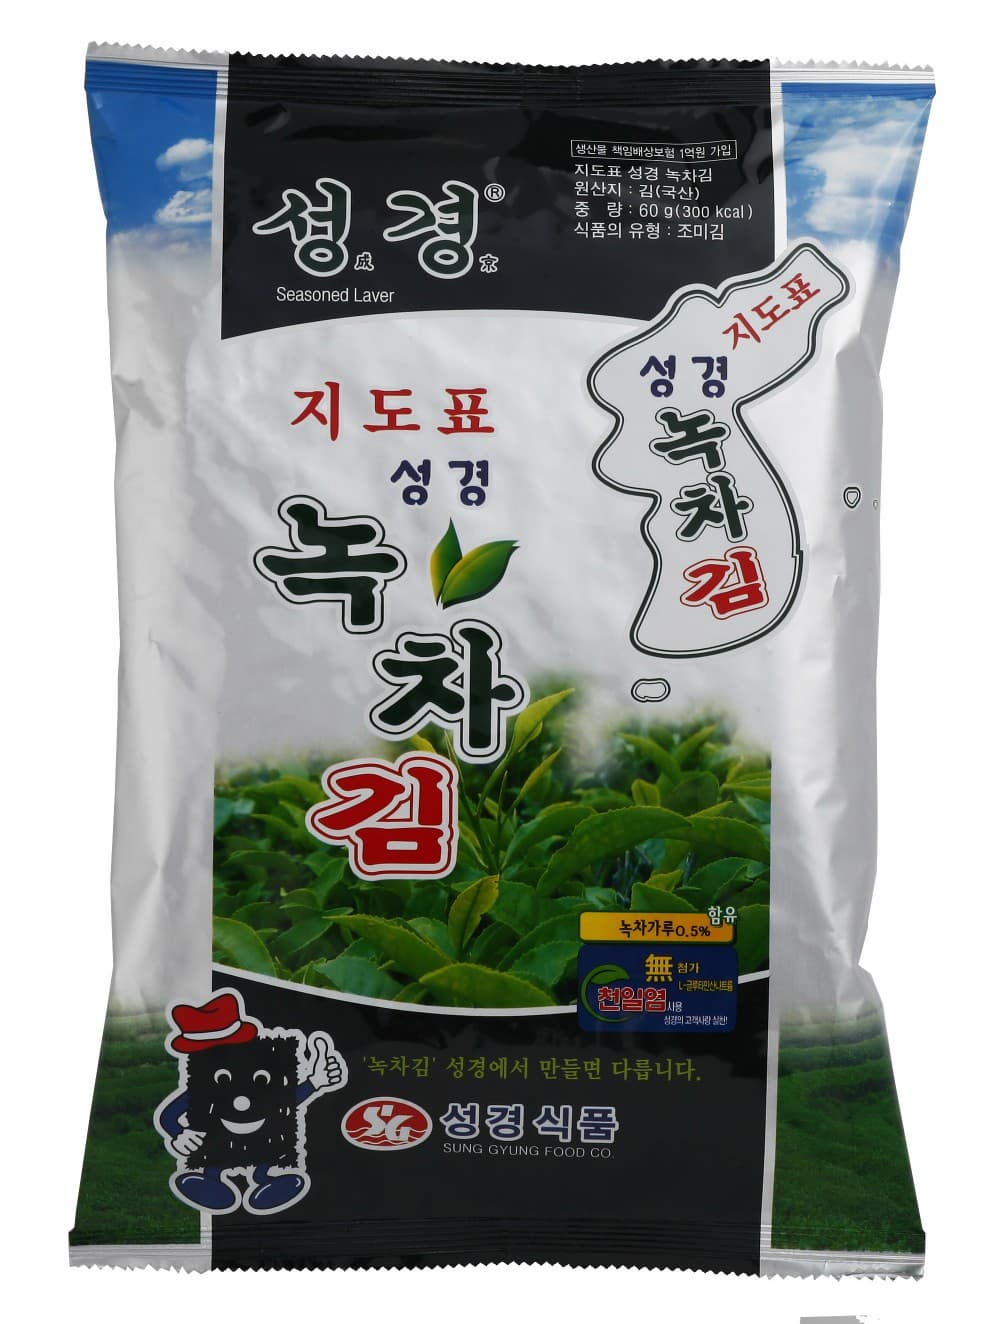 Korean seasoned laver snack Sung Gyung Greentea Laver